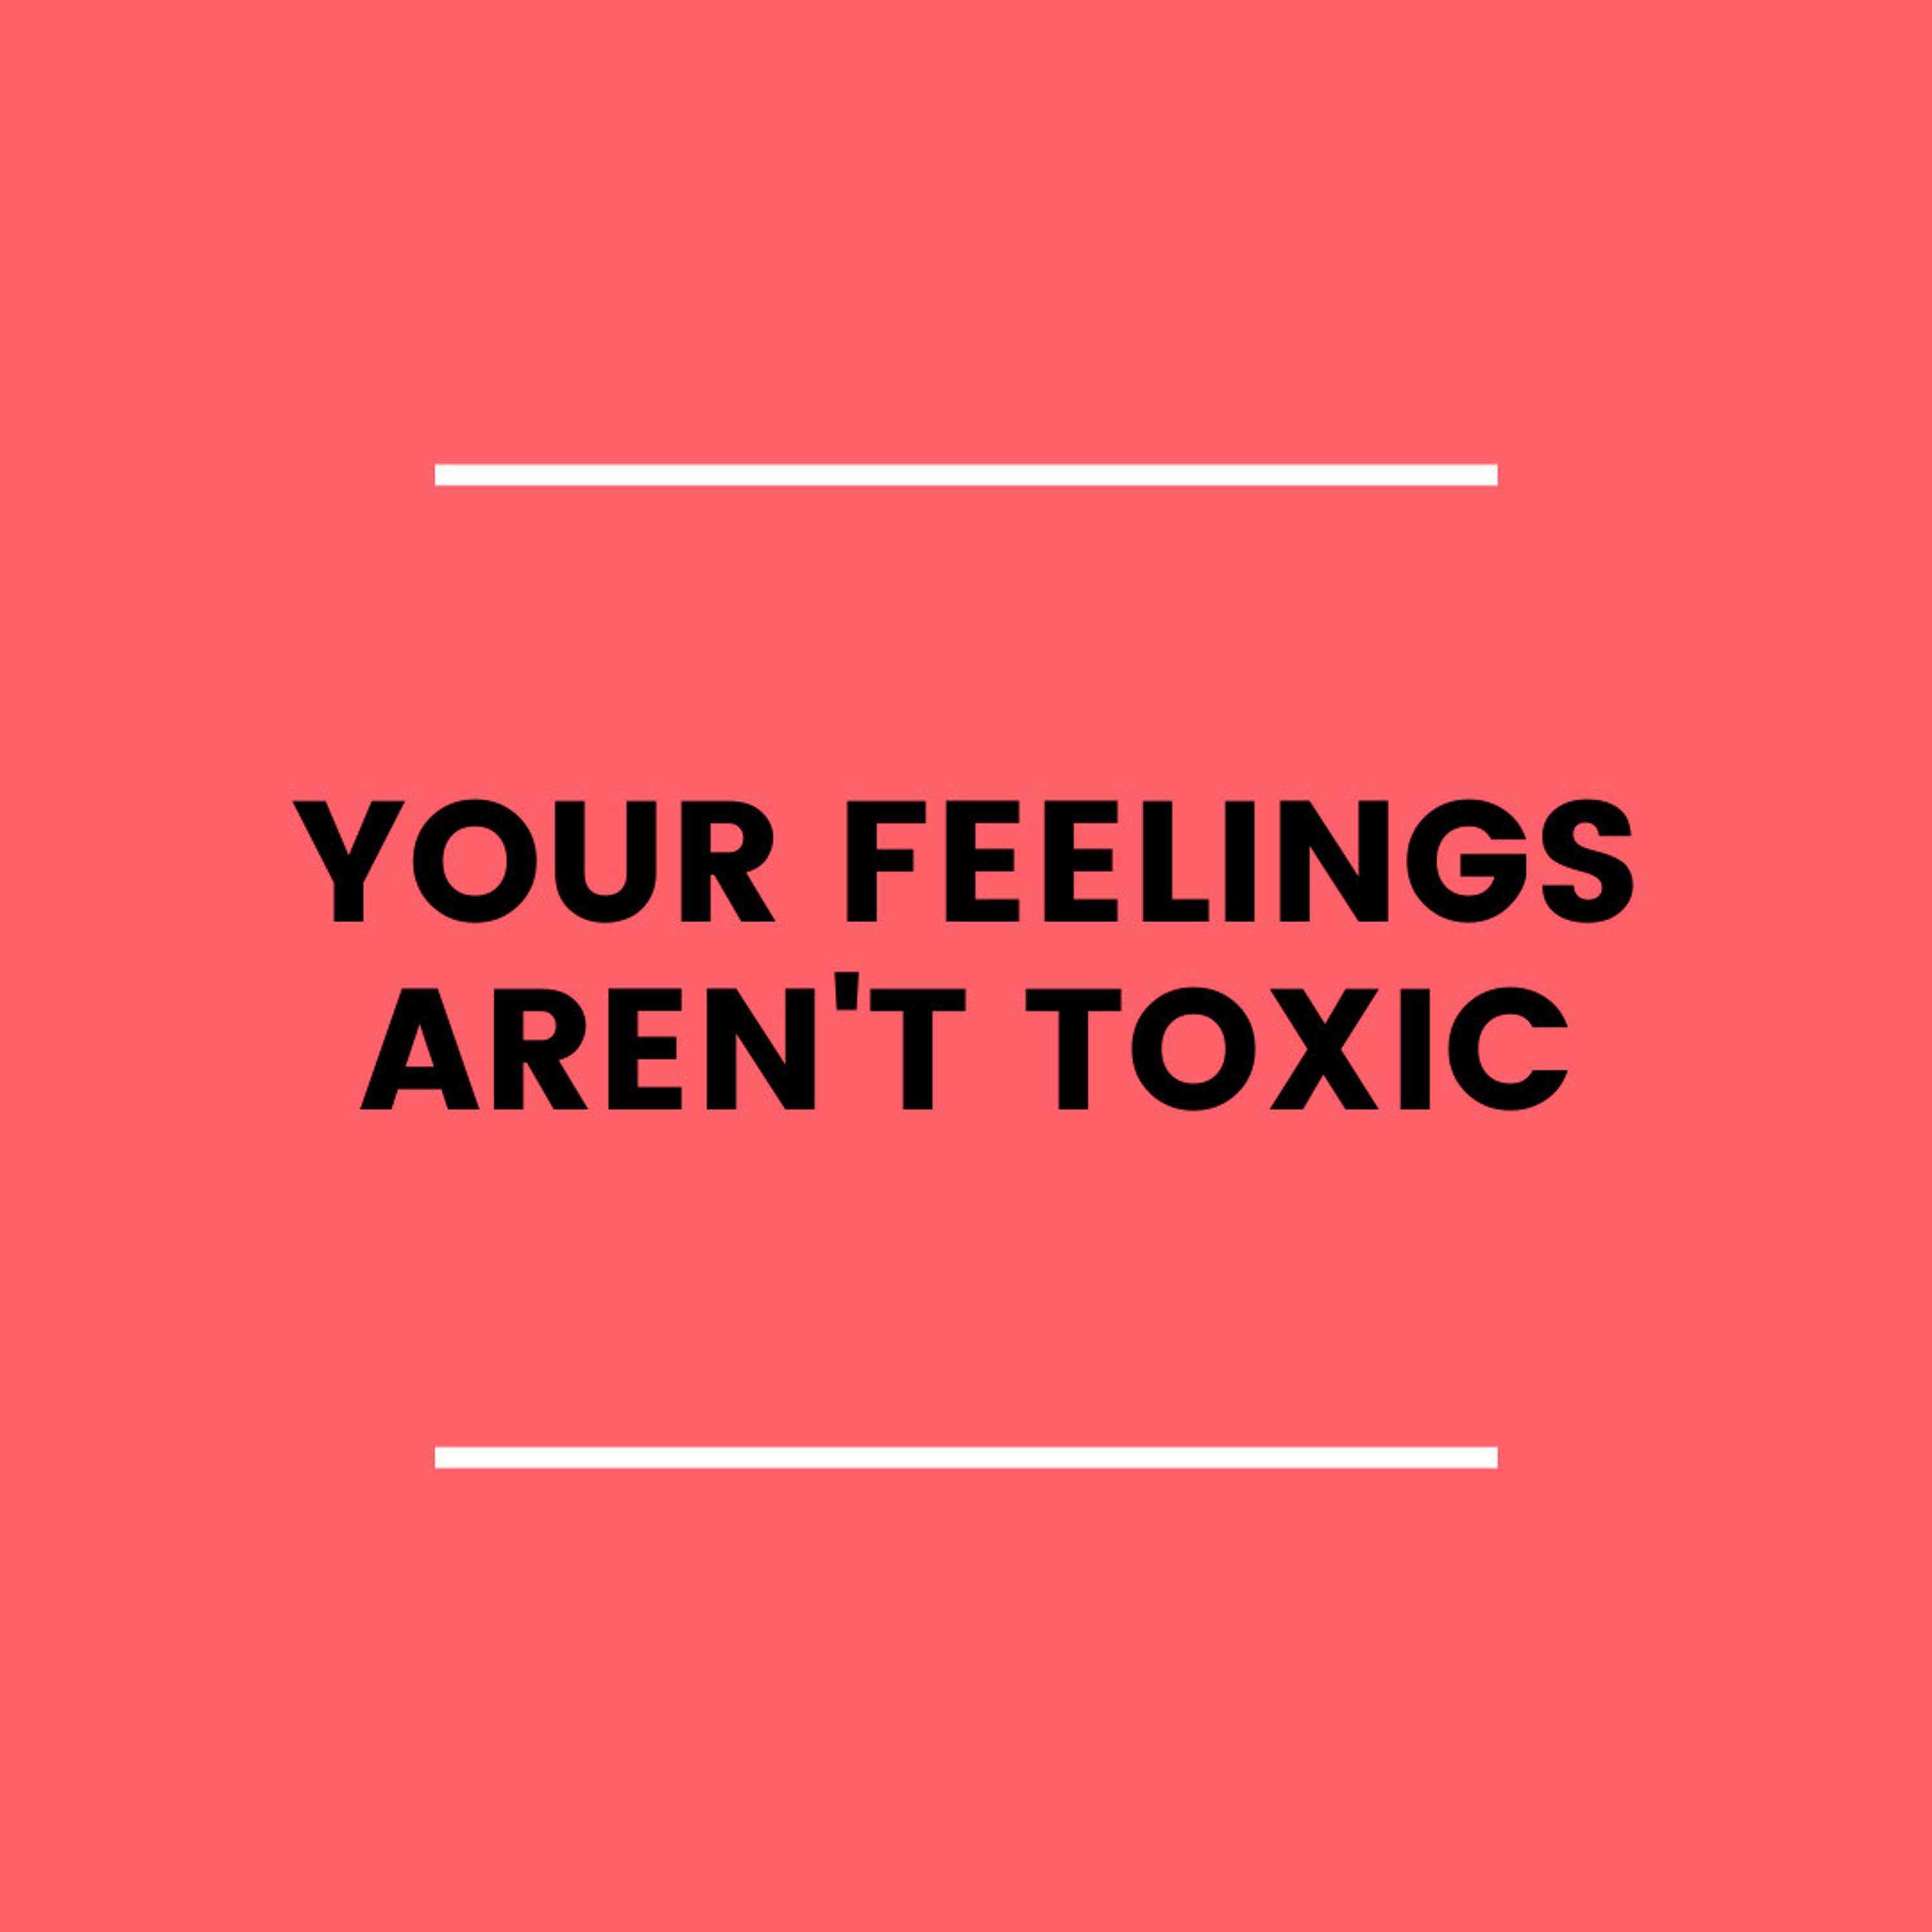 1. Your Feelings Aren’t ”Toxic”